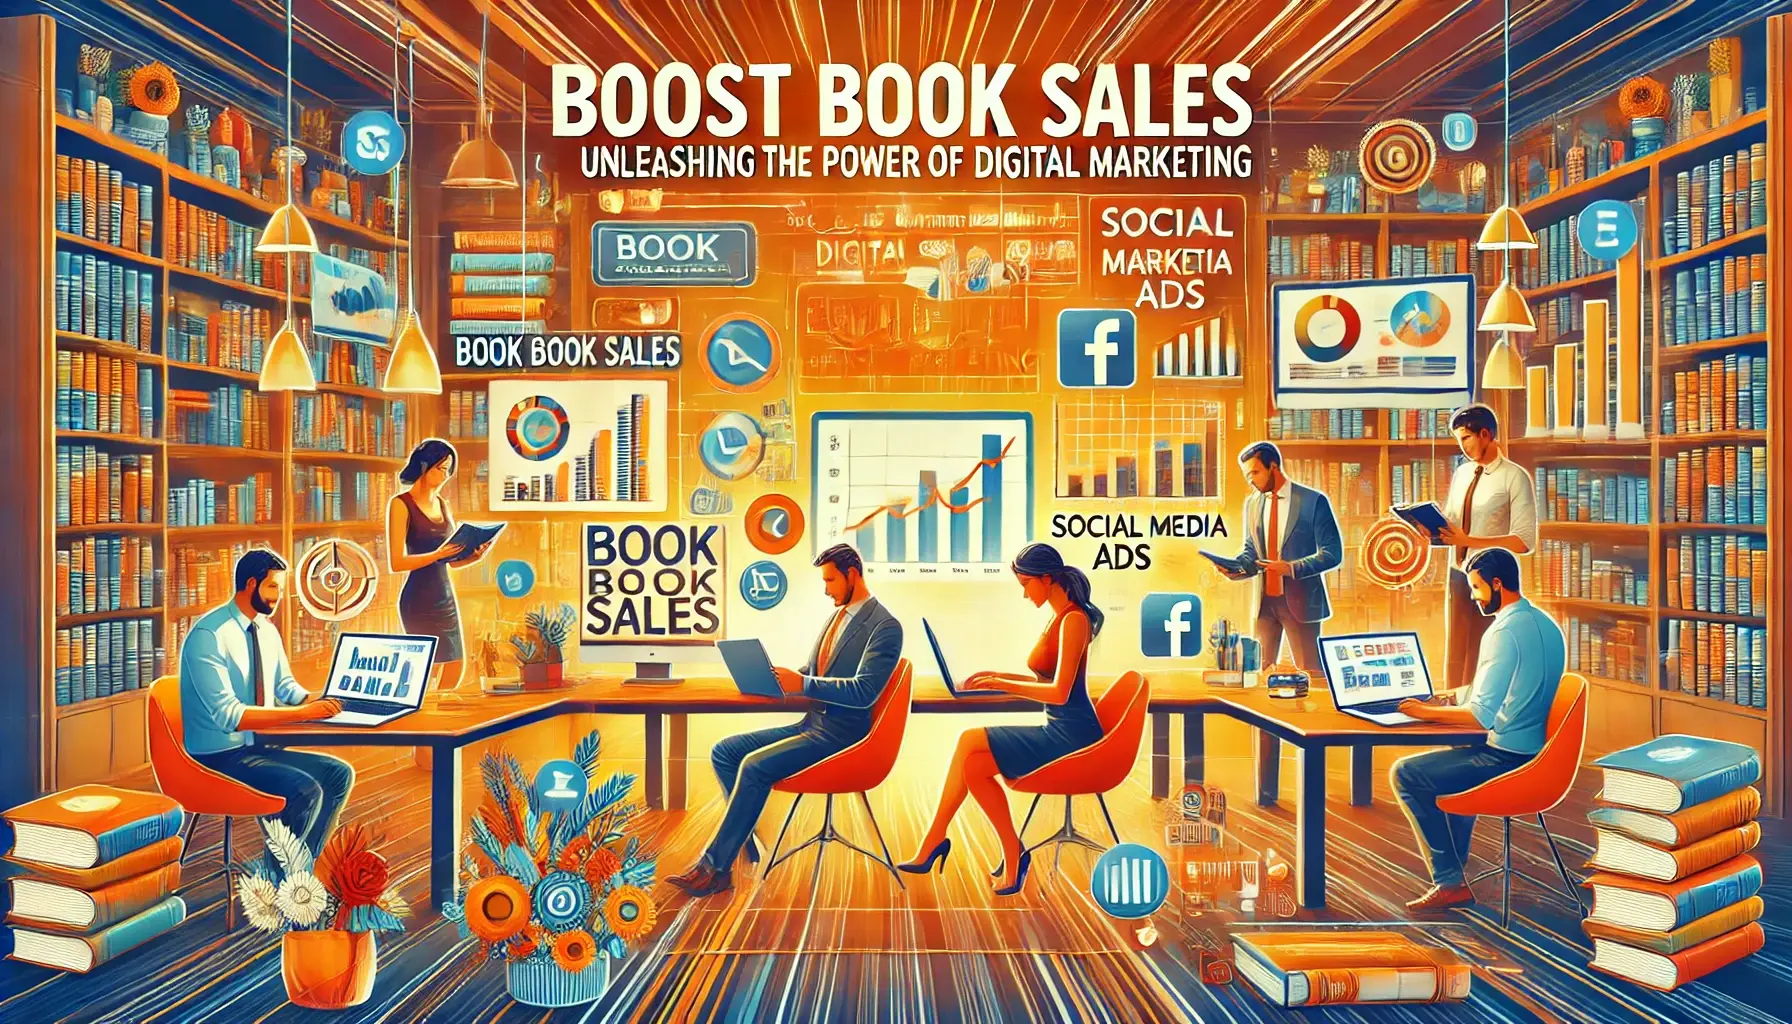 Boost Book Sales: Unleashing the Power of Digital Marketing